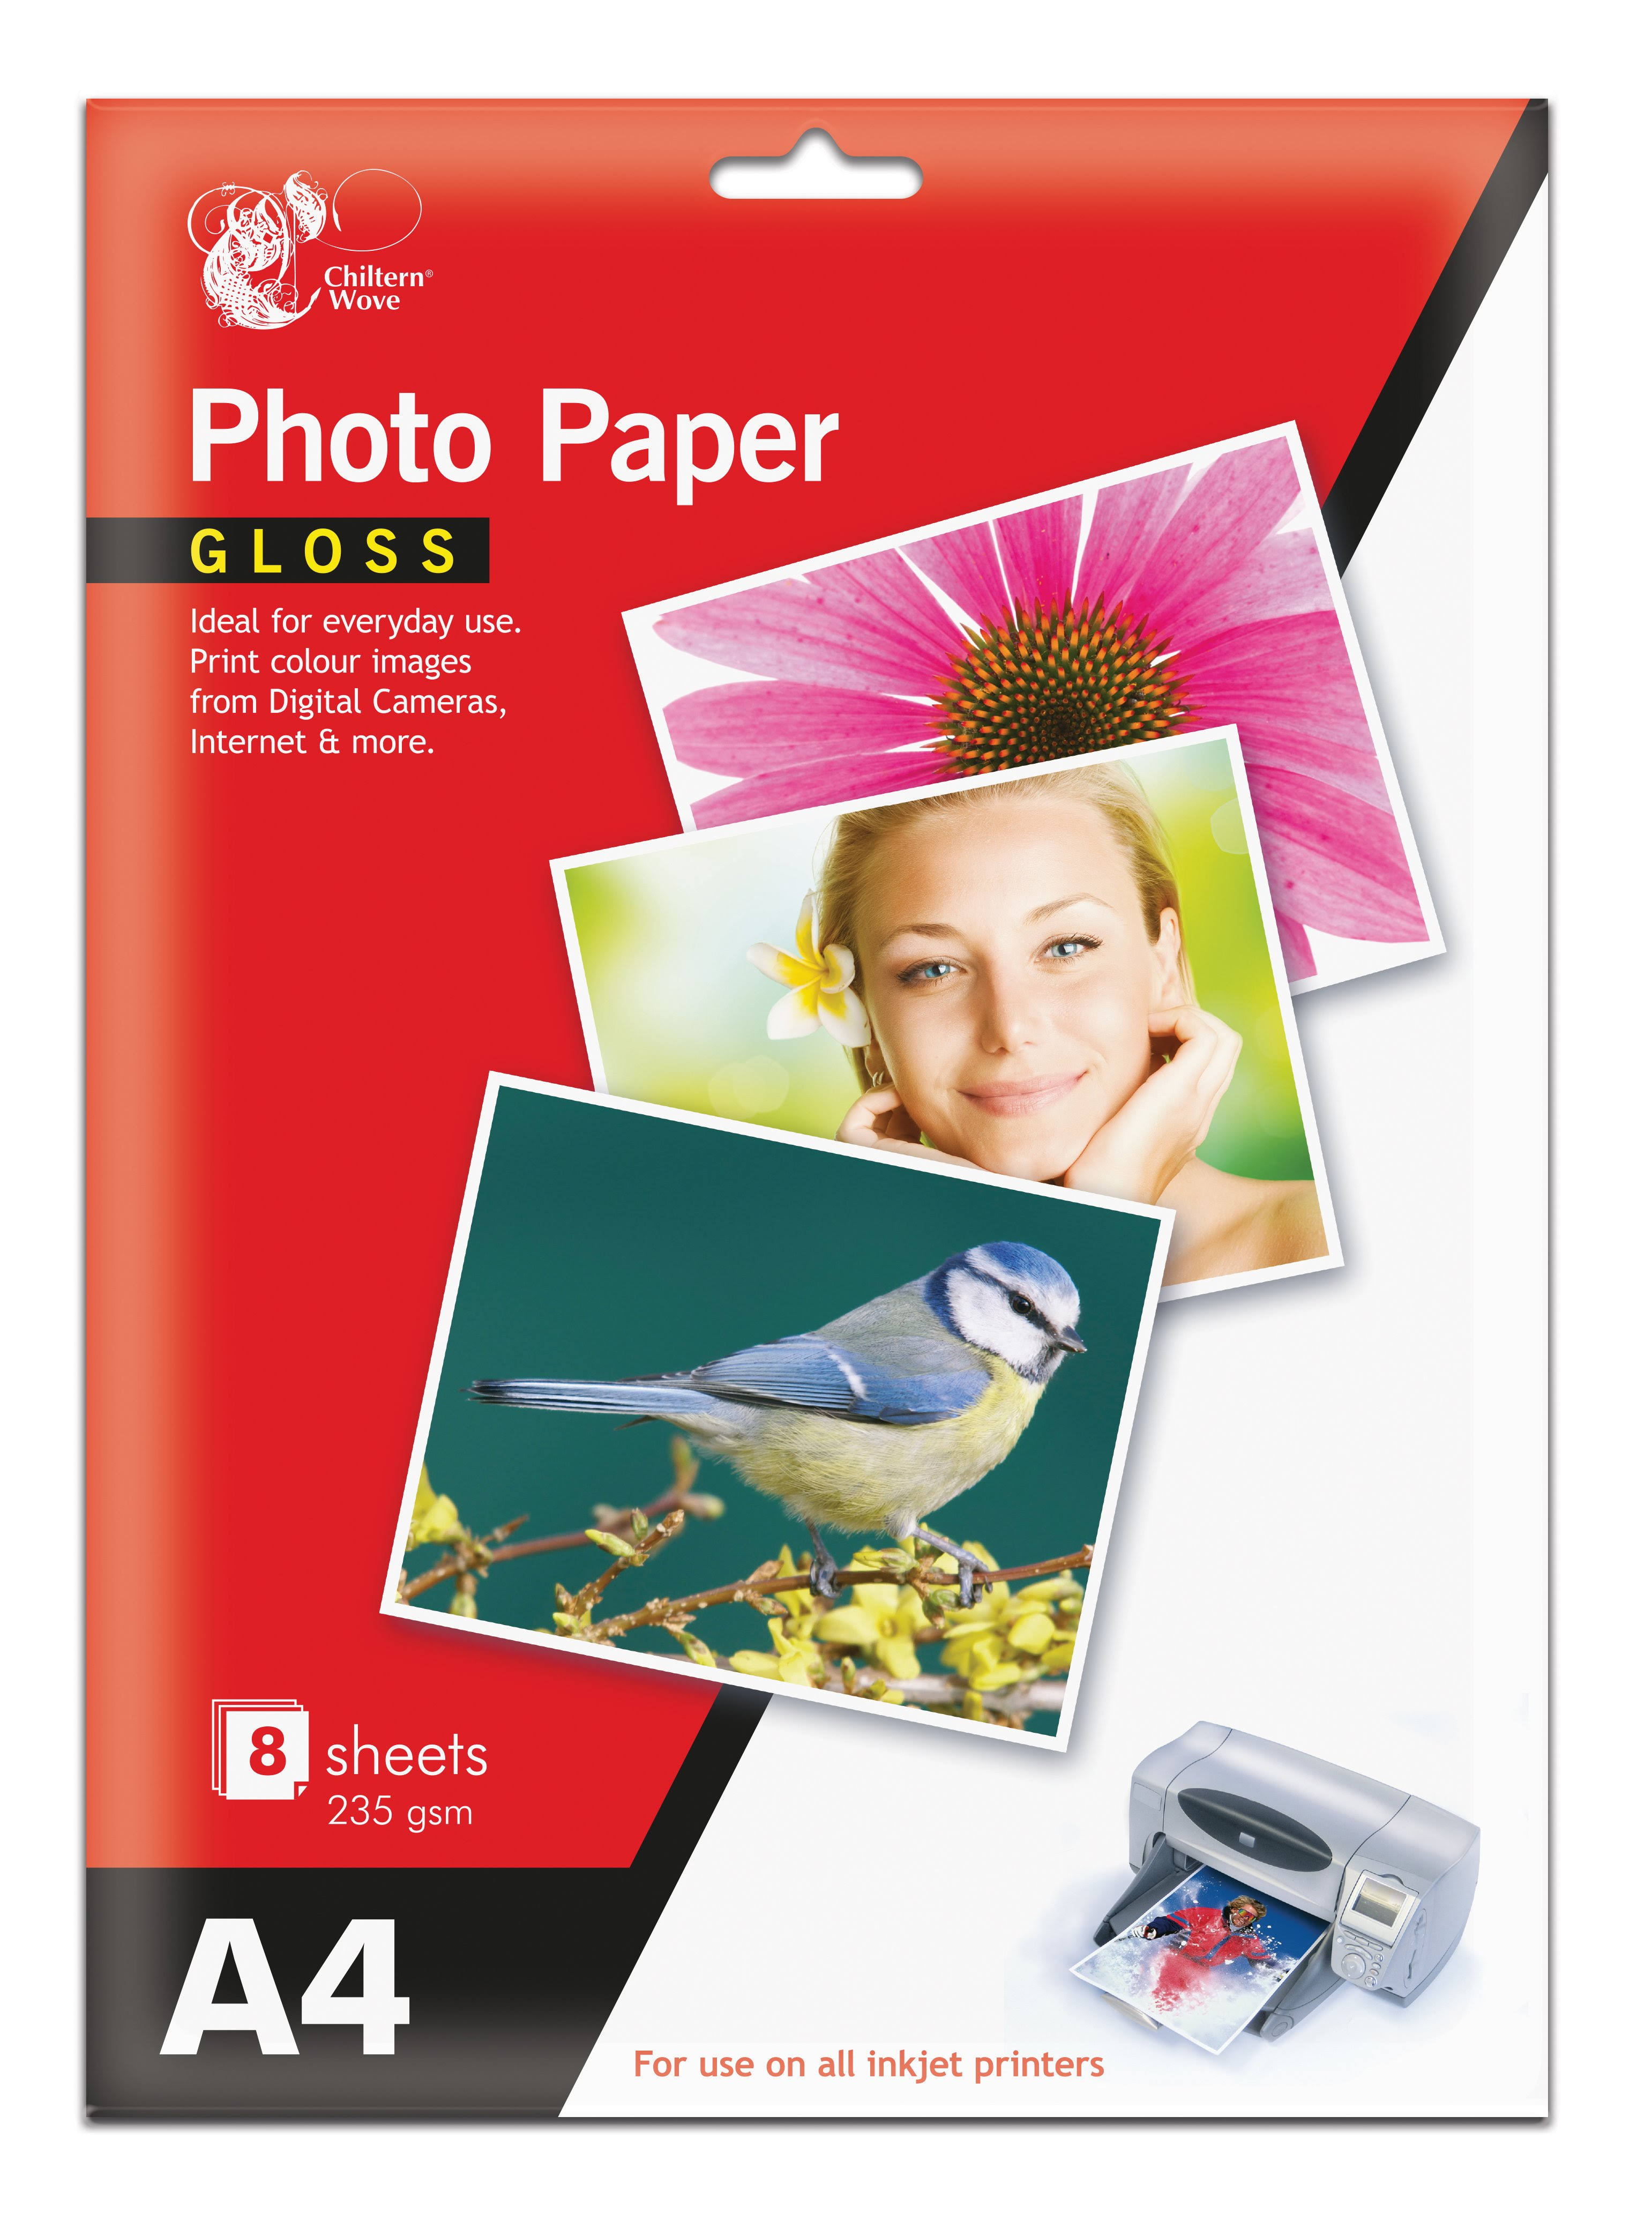 Photo Paper Gloss A4 8 Sheets 235 GSM Printer Chiltern Wove ss575a